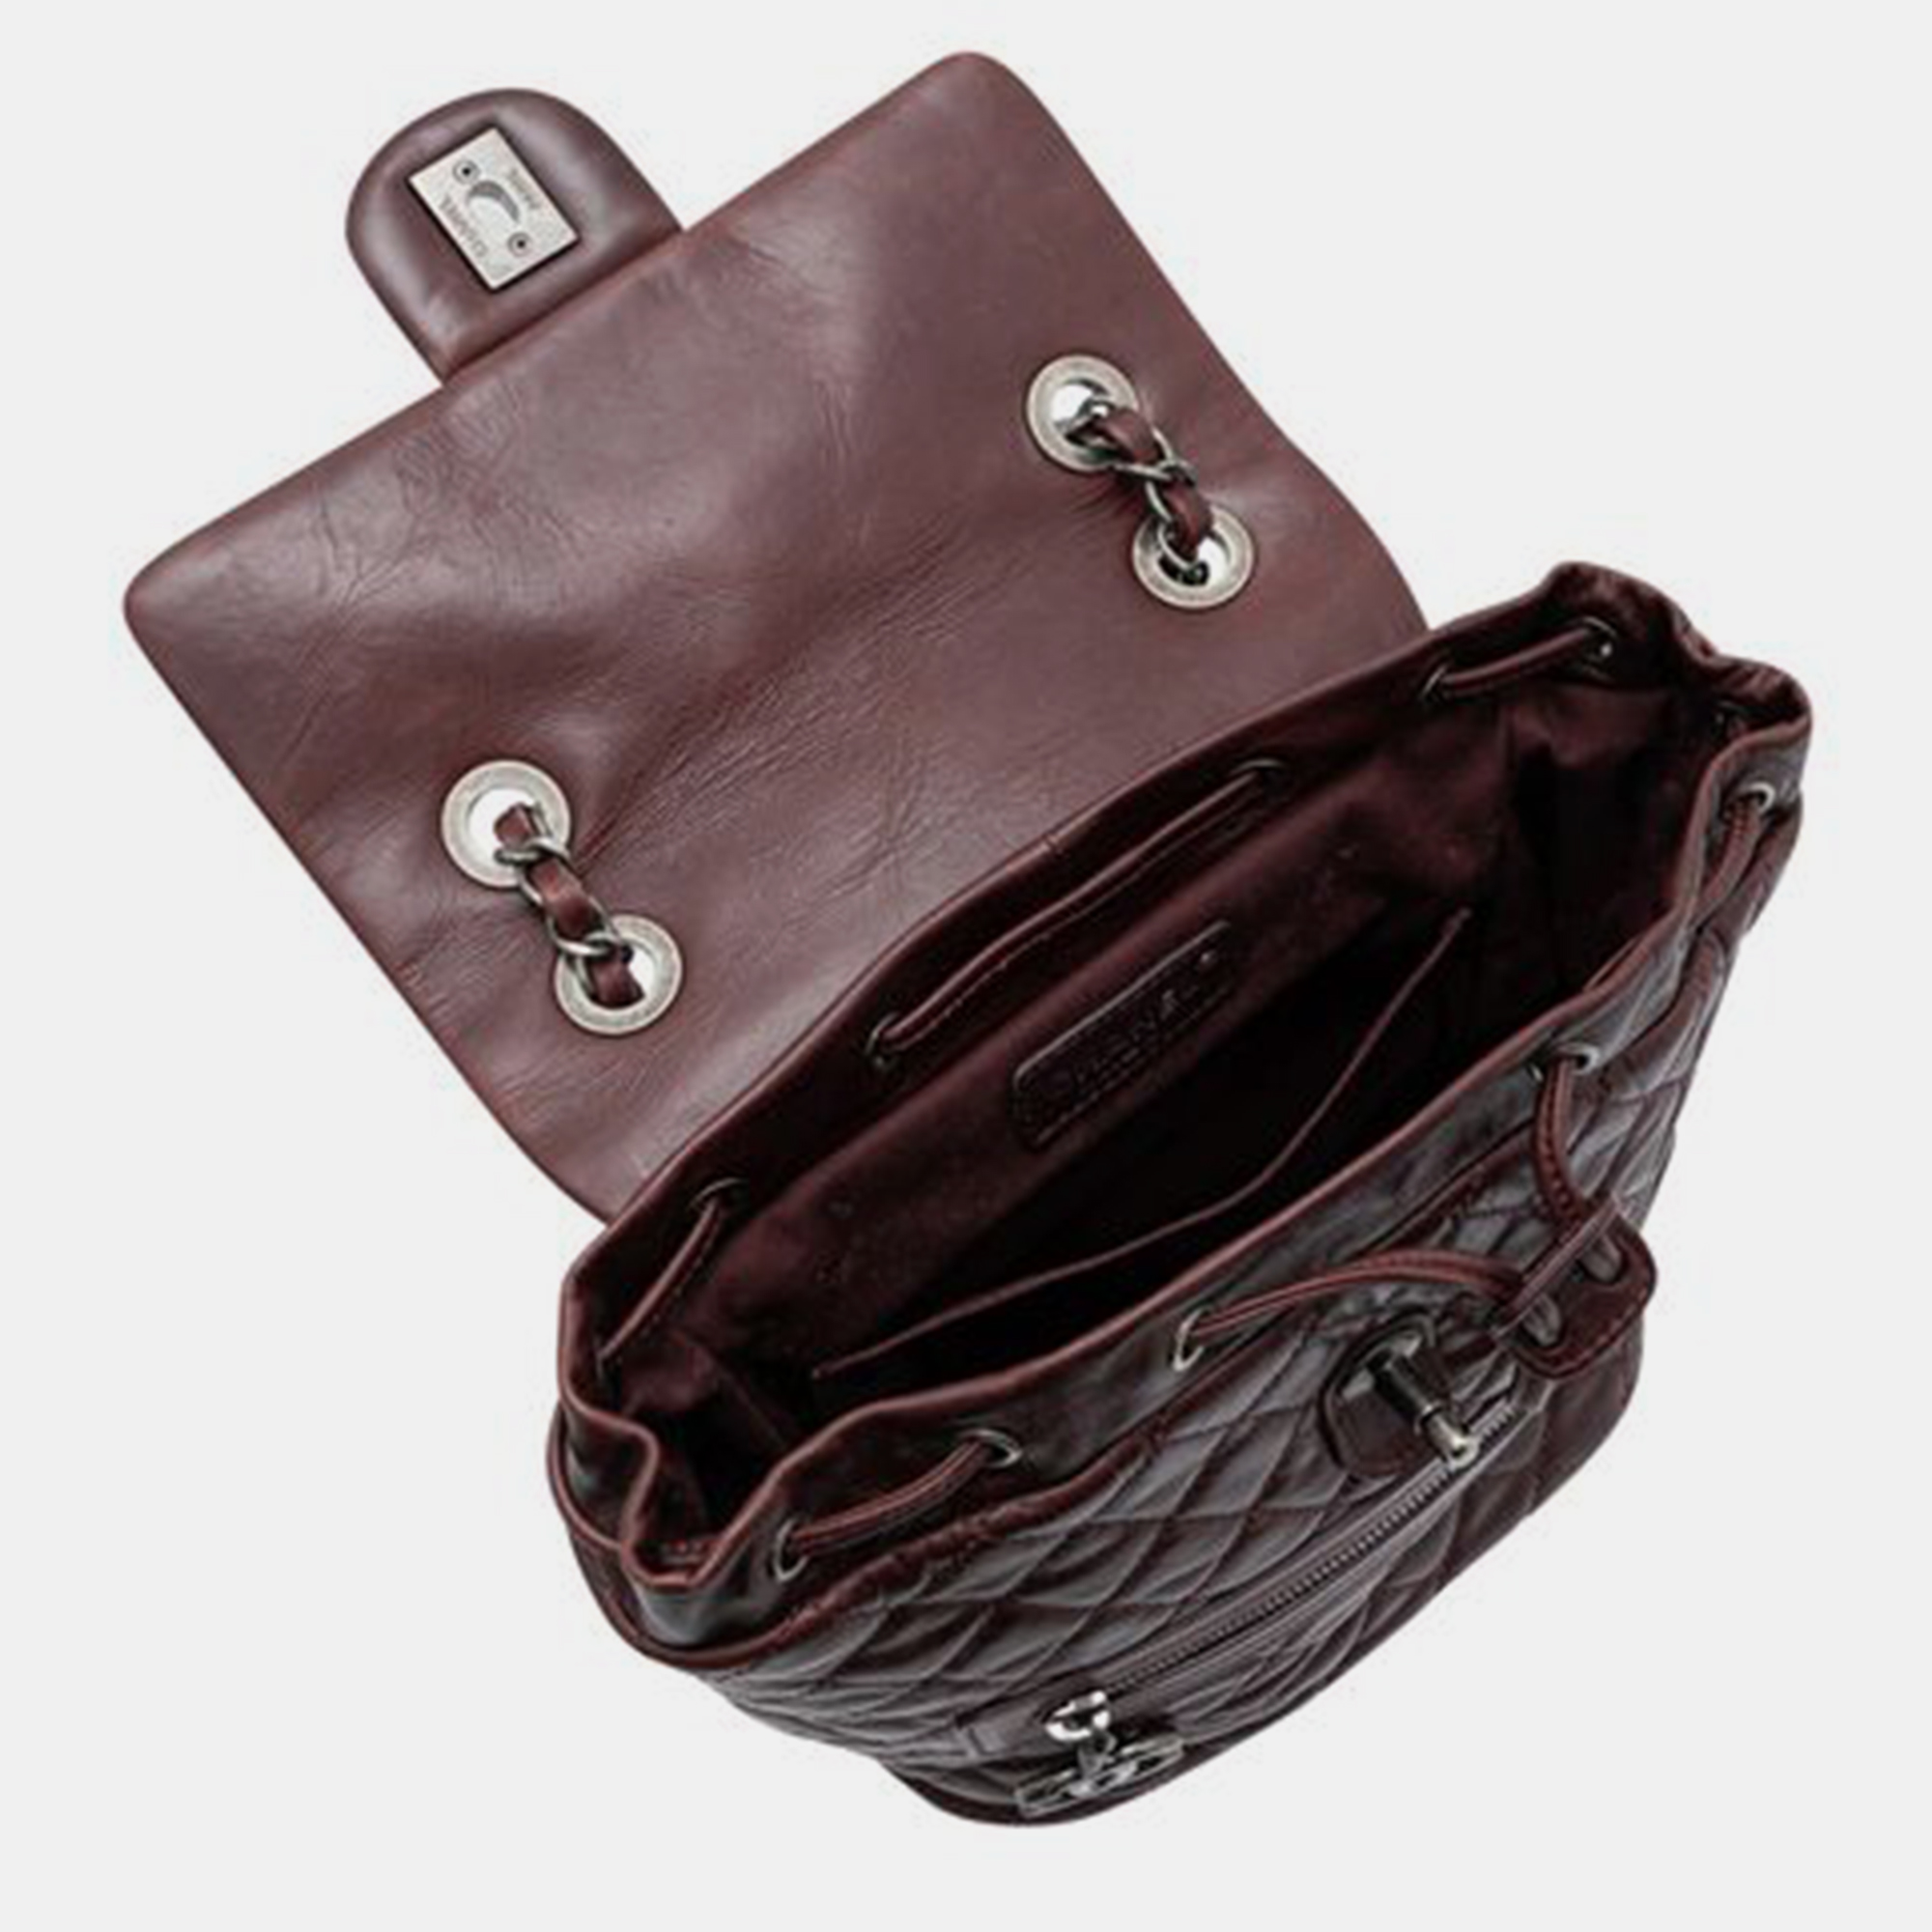 CHANEL Paris-salzburg Mountain Maroon Calfskin Leather Backpack SHOULDER BAGS